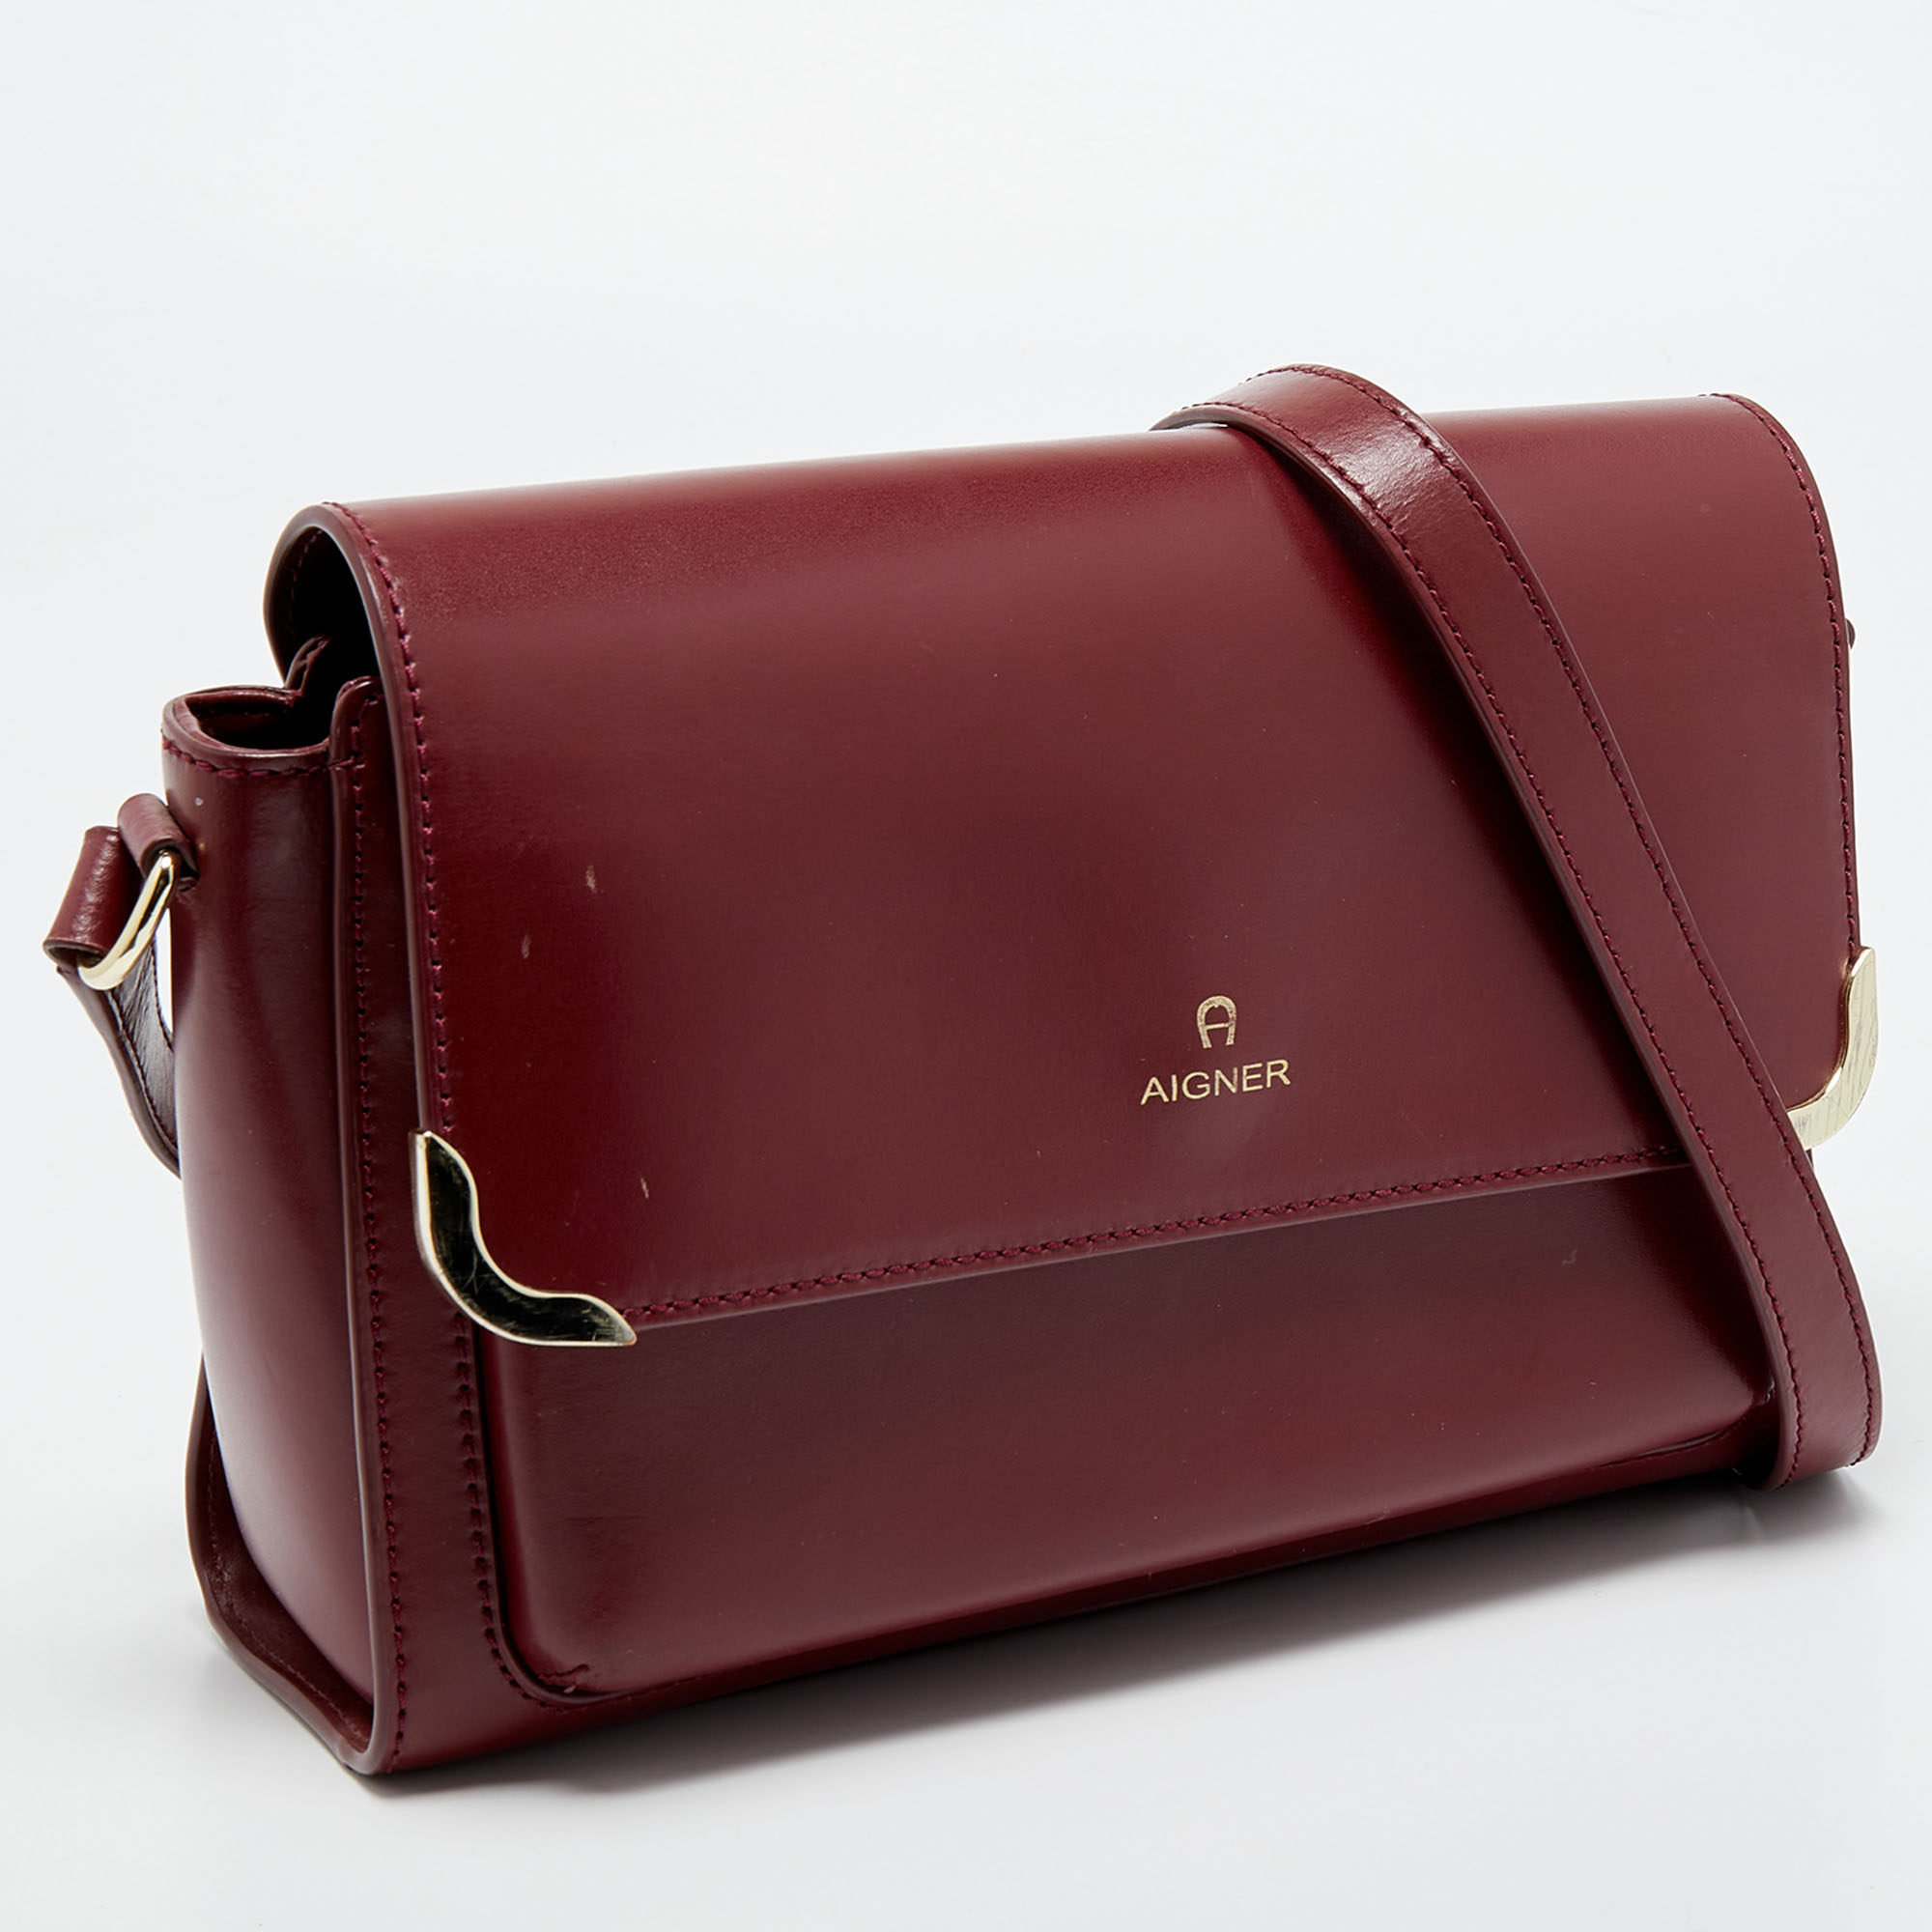 Aigner Burgundy Leather Amber Flap Crossbody Bag